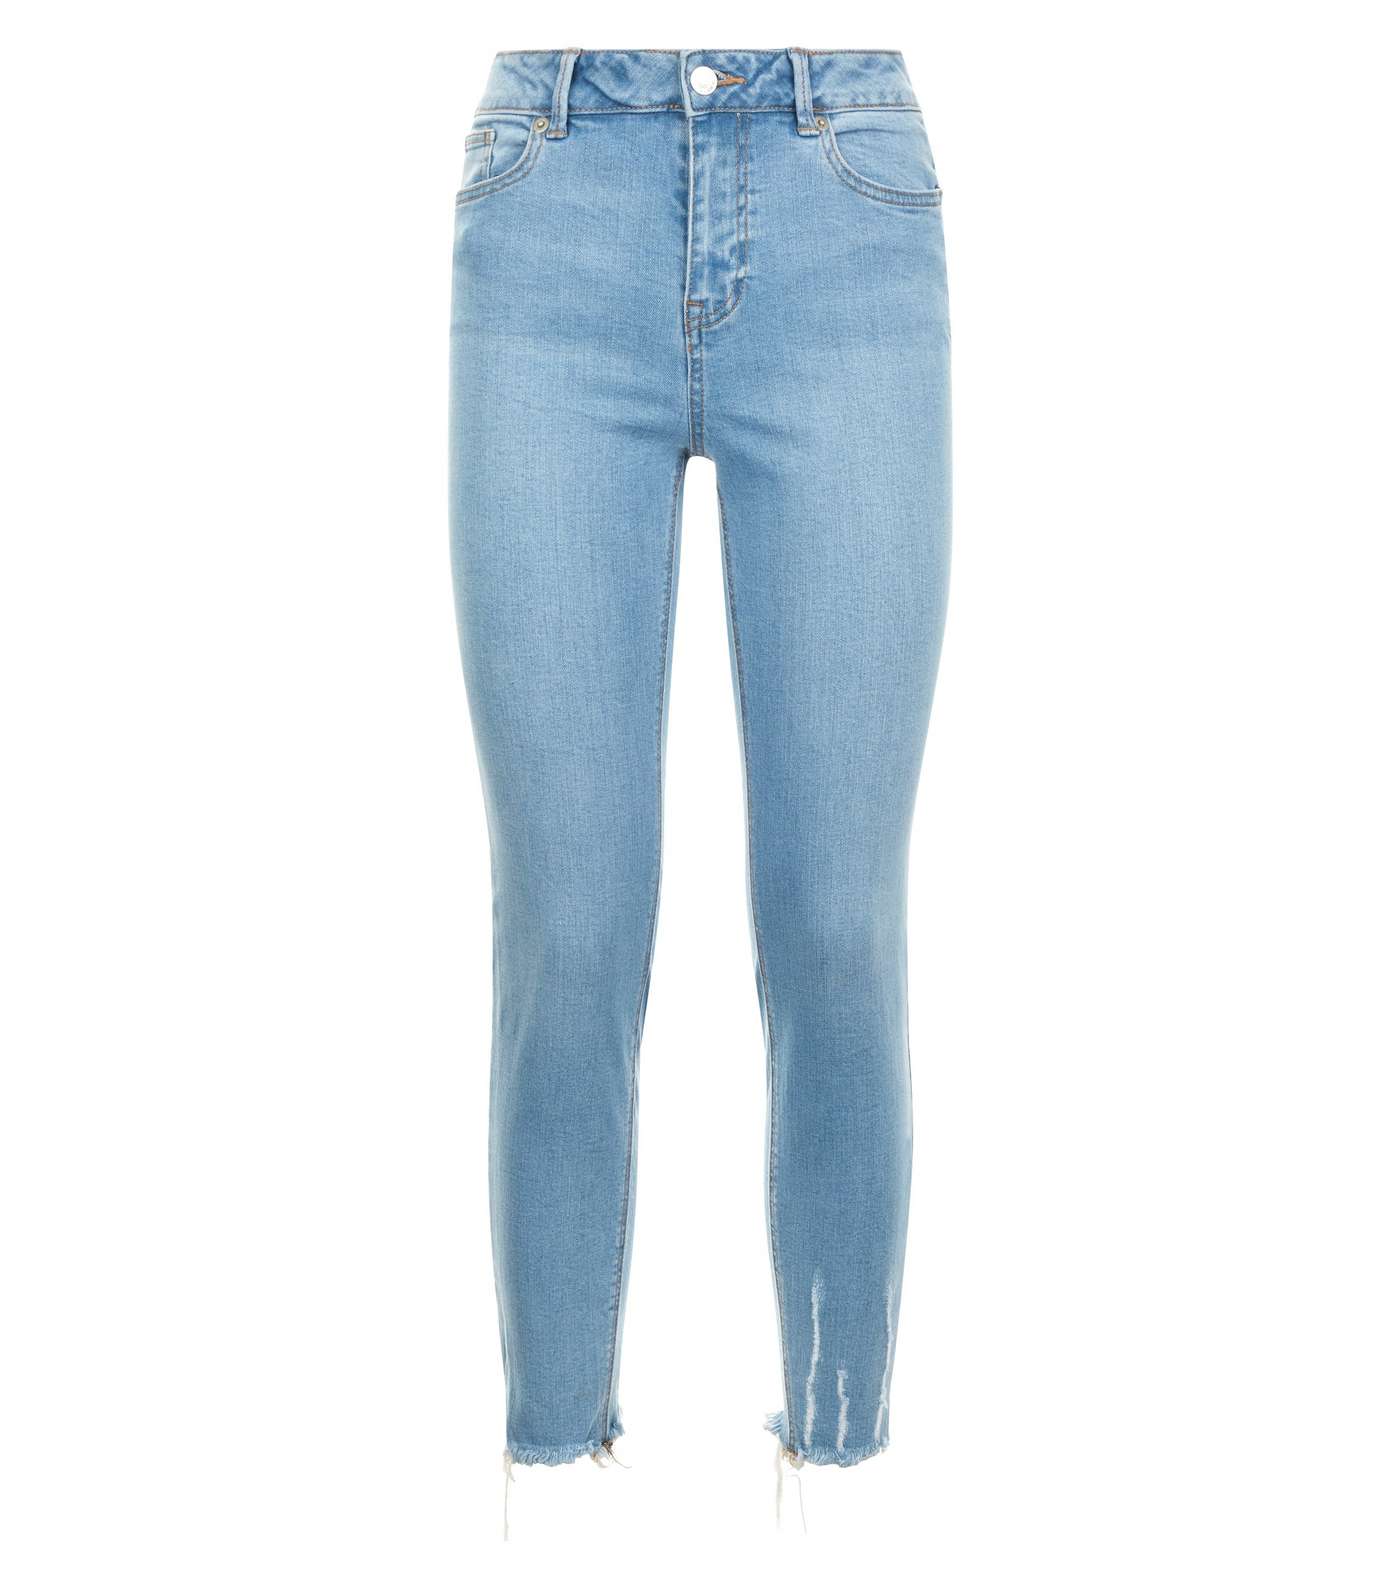 Pale Blue Distressed Hem Skinny Jenna Jeans Image 4